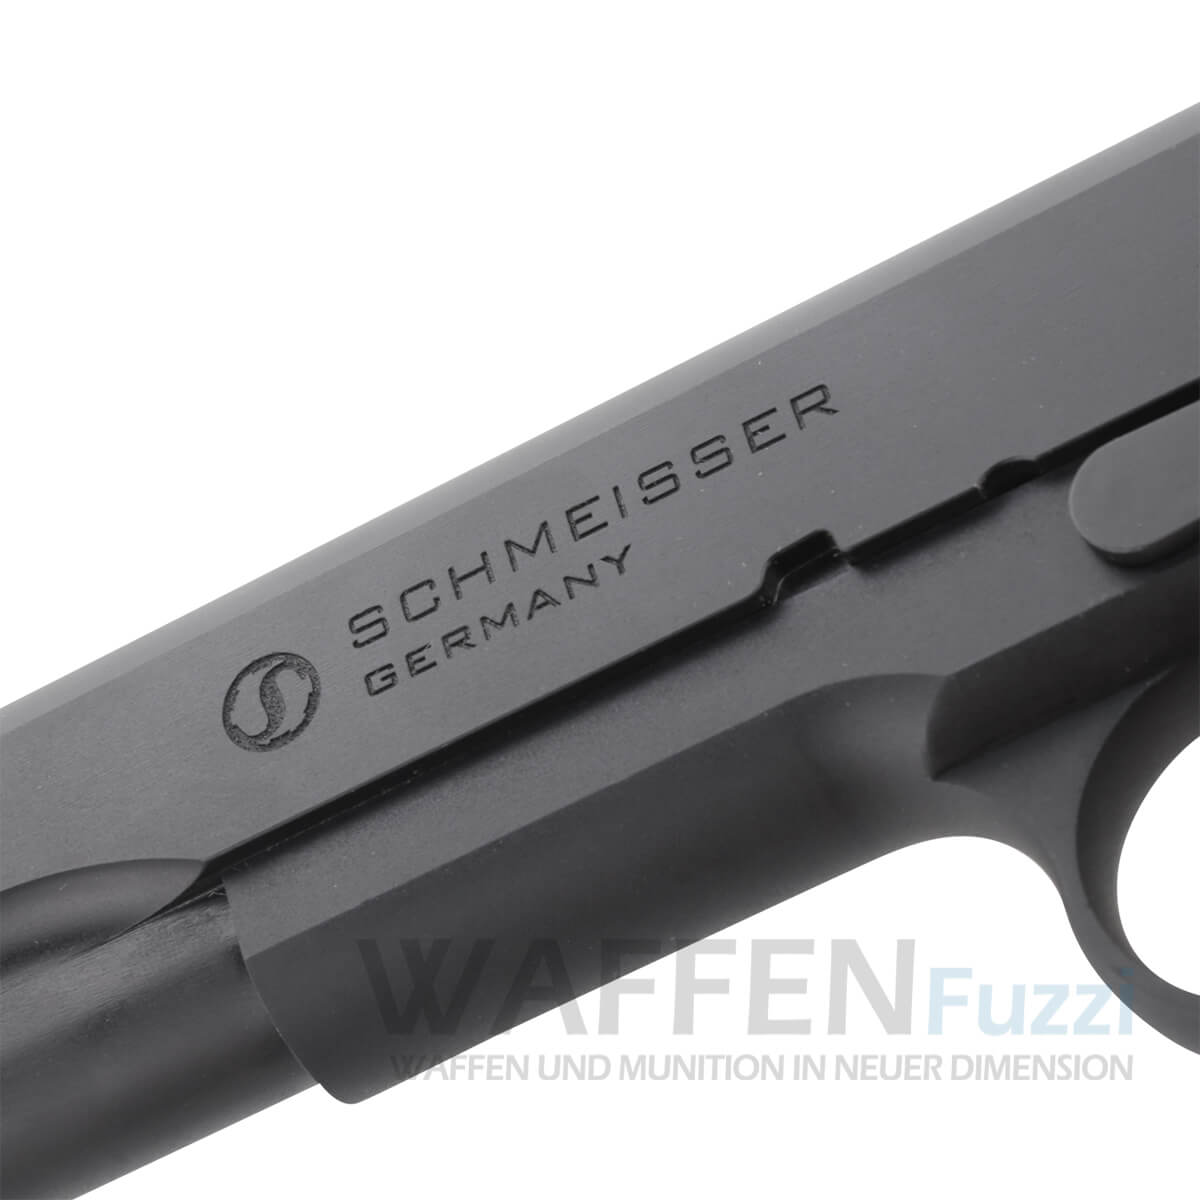 Schmeisser Pistolen made in Germany bei Waffenfuzzi.de